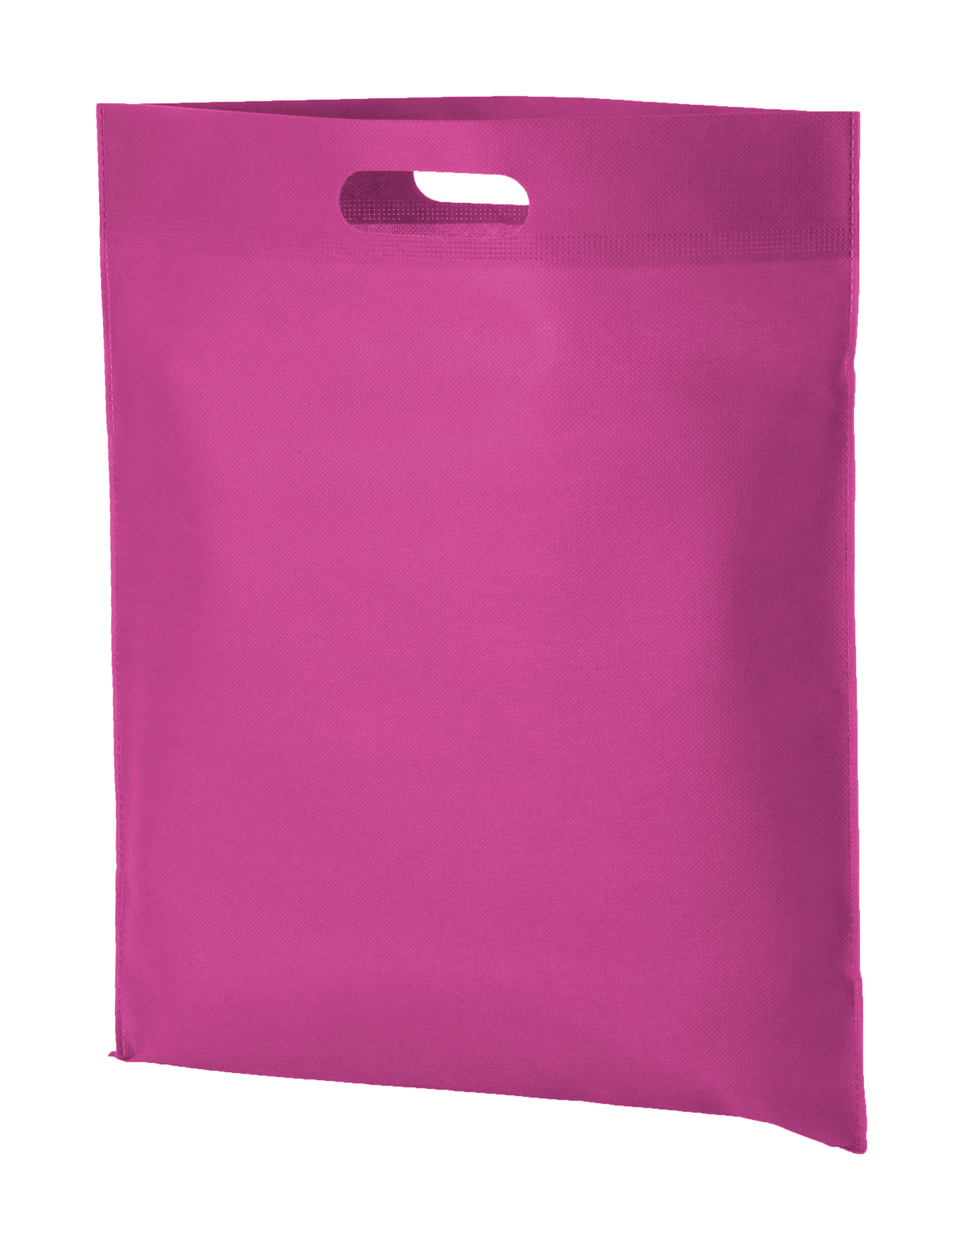 Blaster nákupní taška - ružová